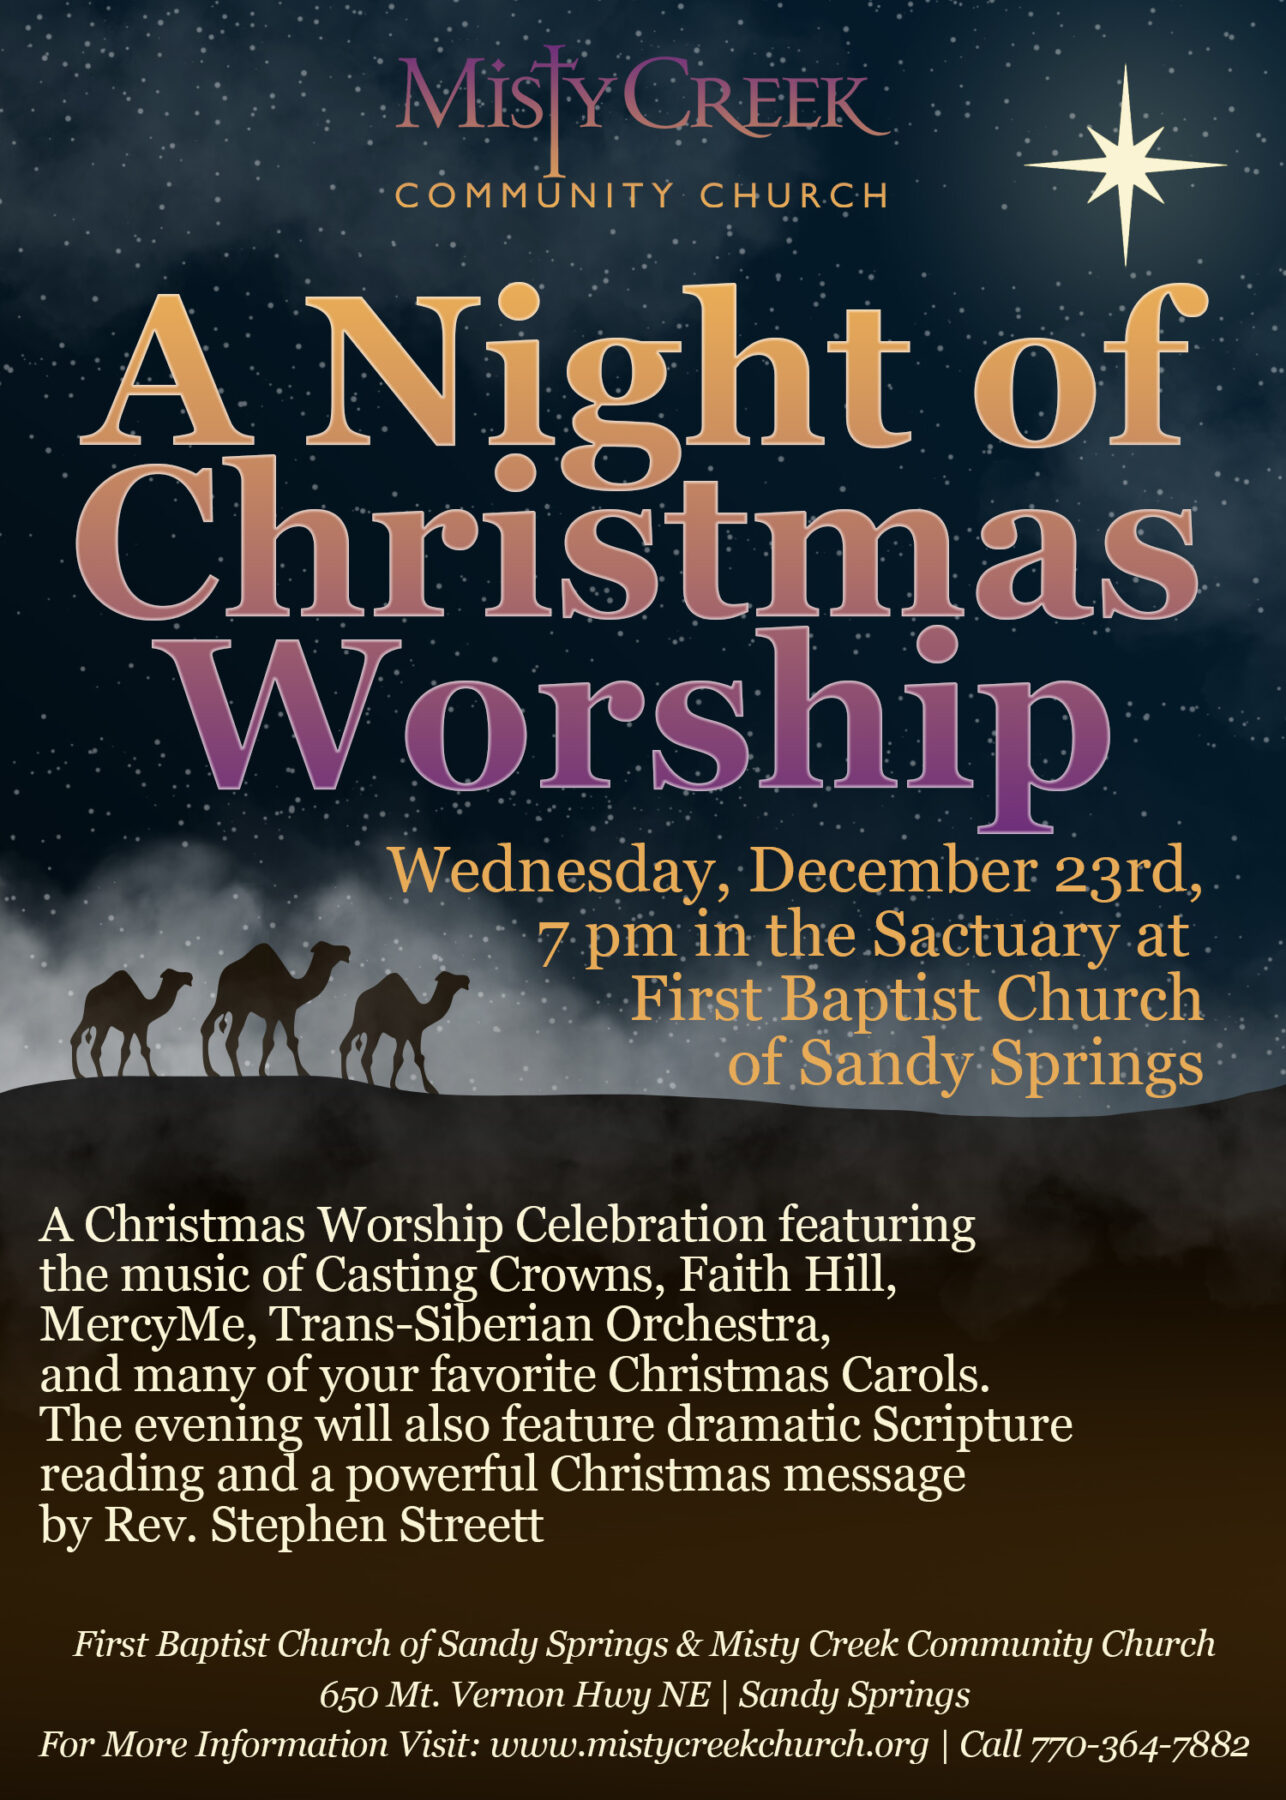 A Night of Christmas Worship at Misty Creek Community Church